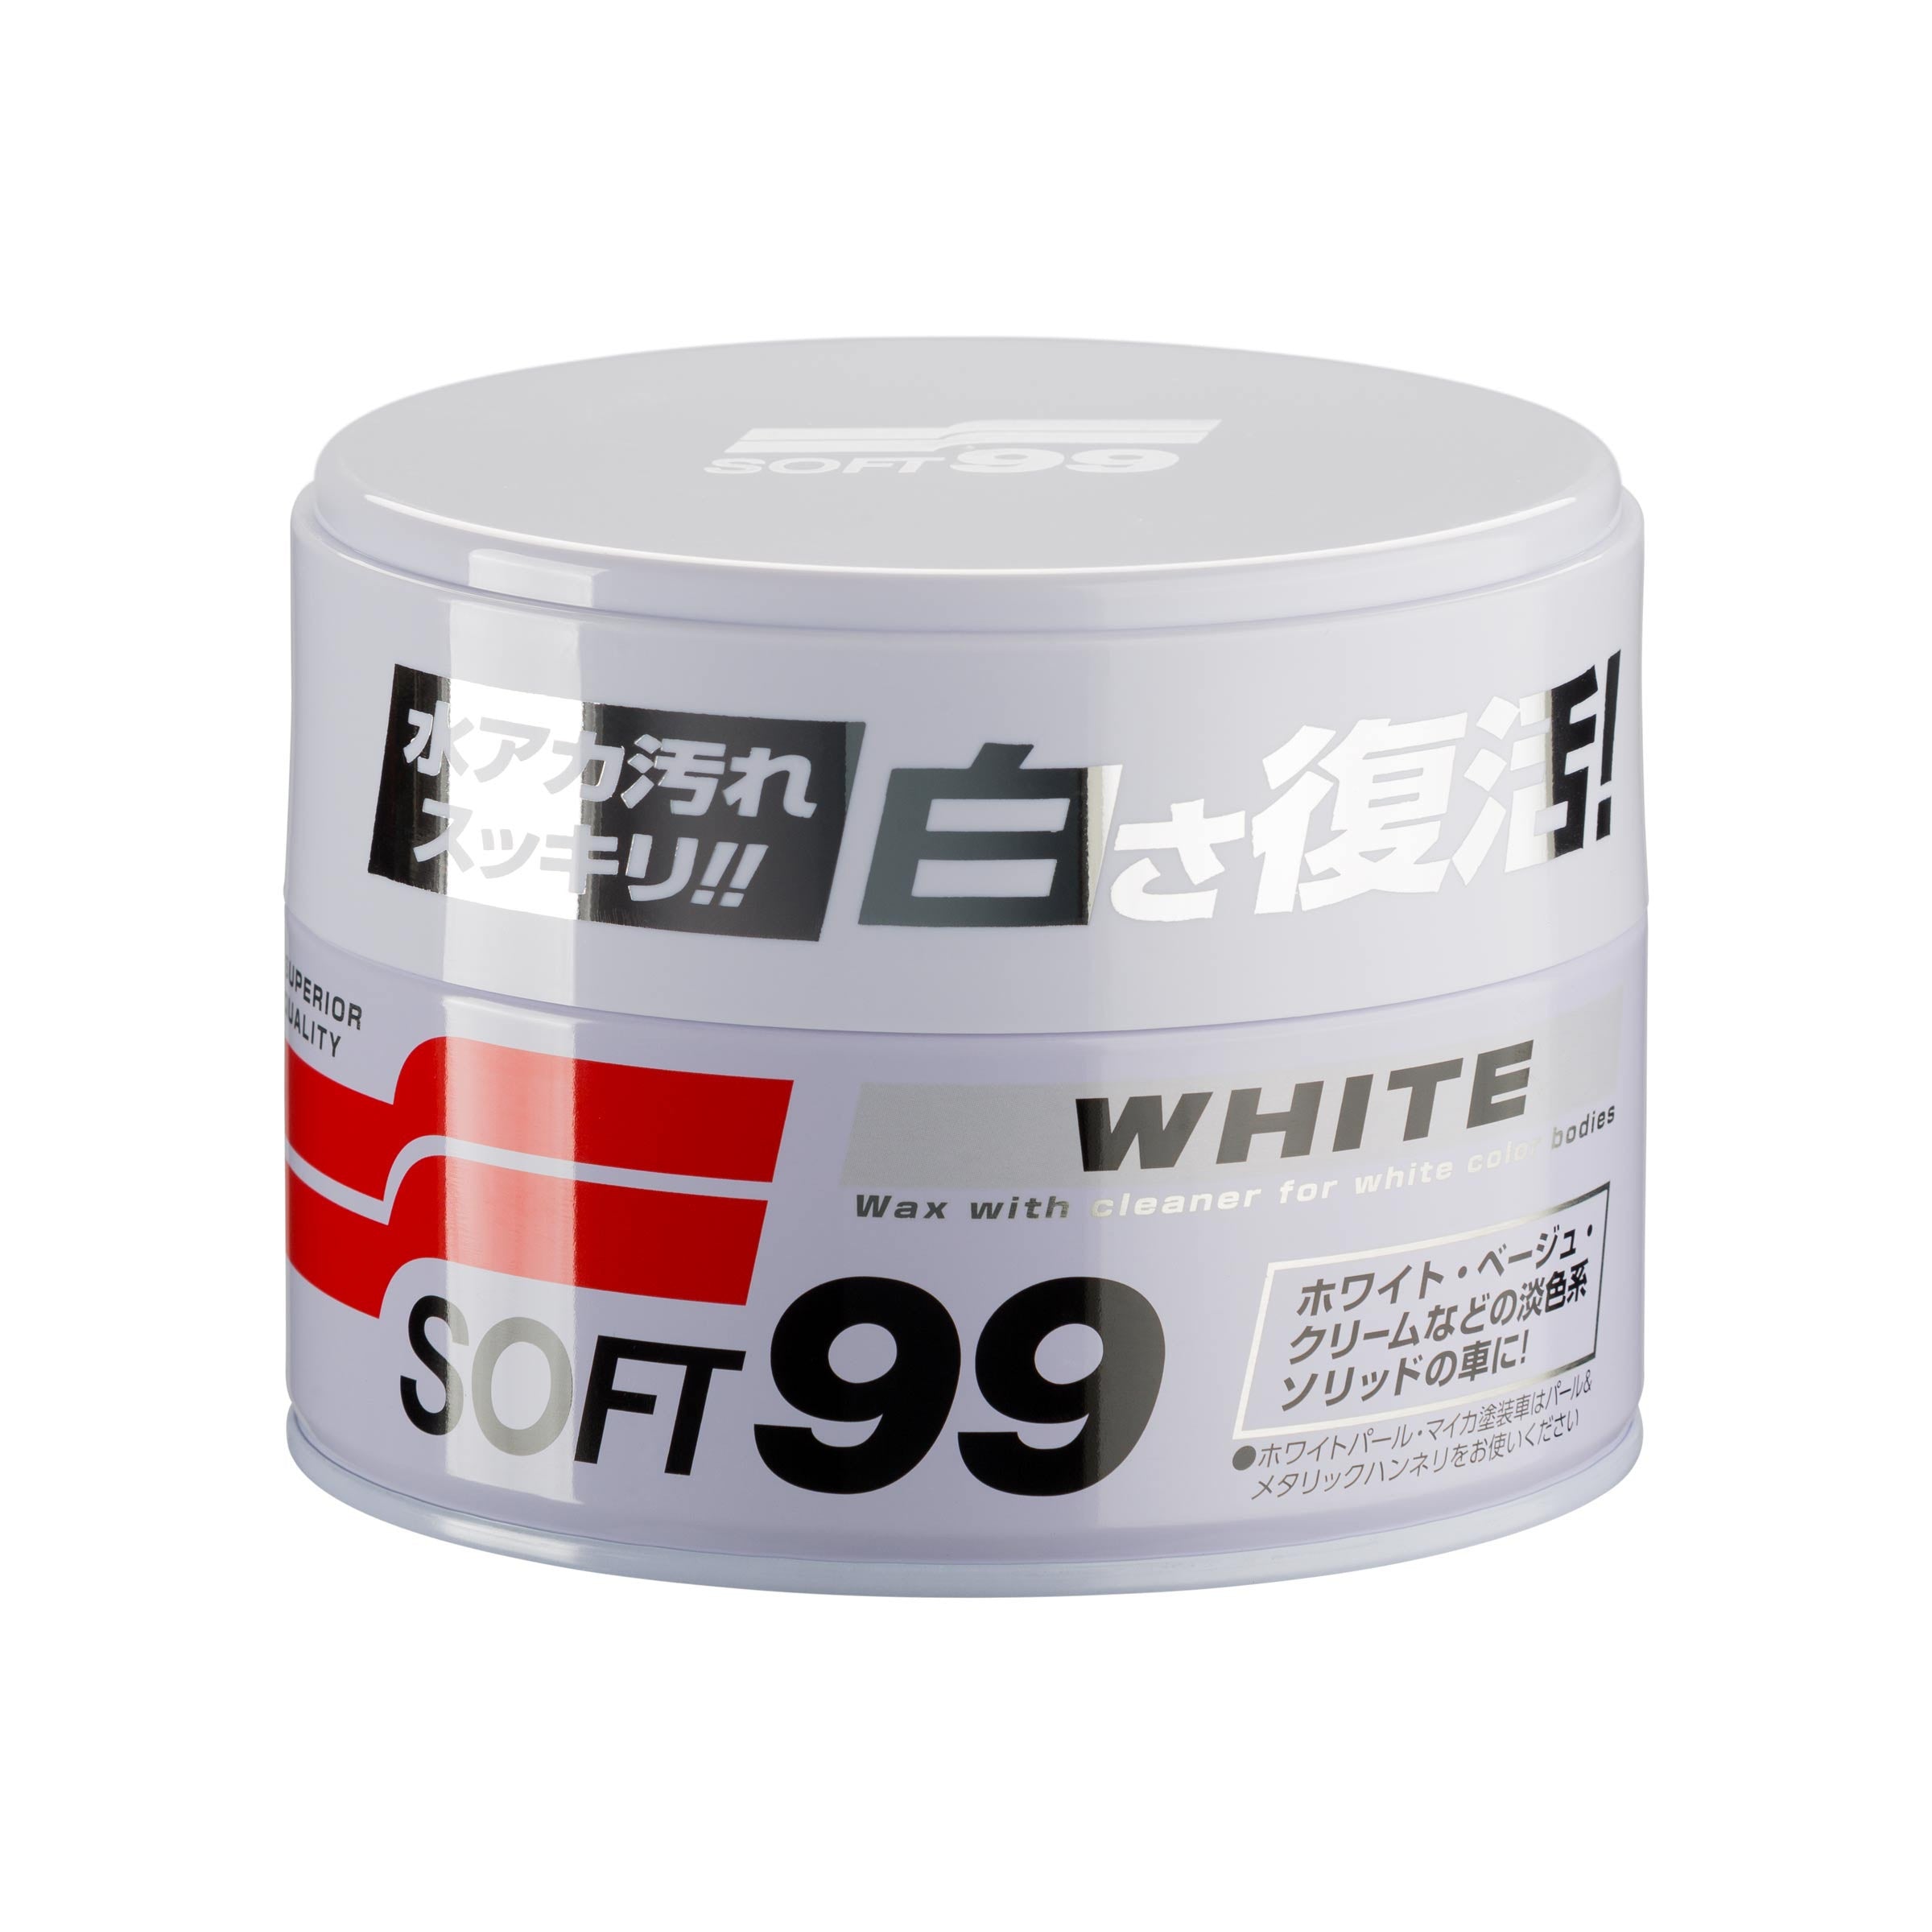 Soft99 Soft Wax White – XPERT DETAILING